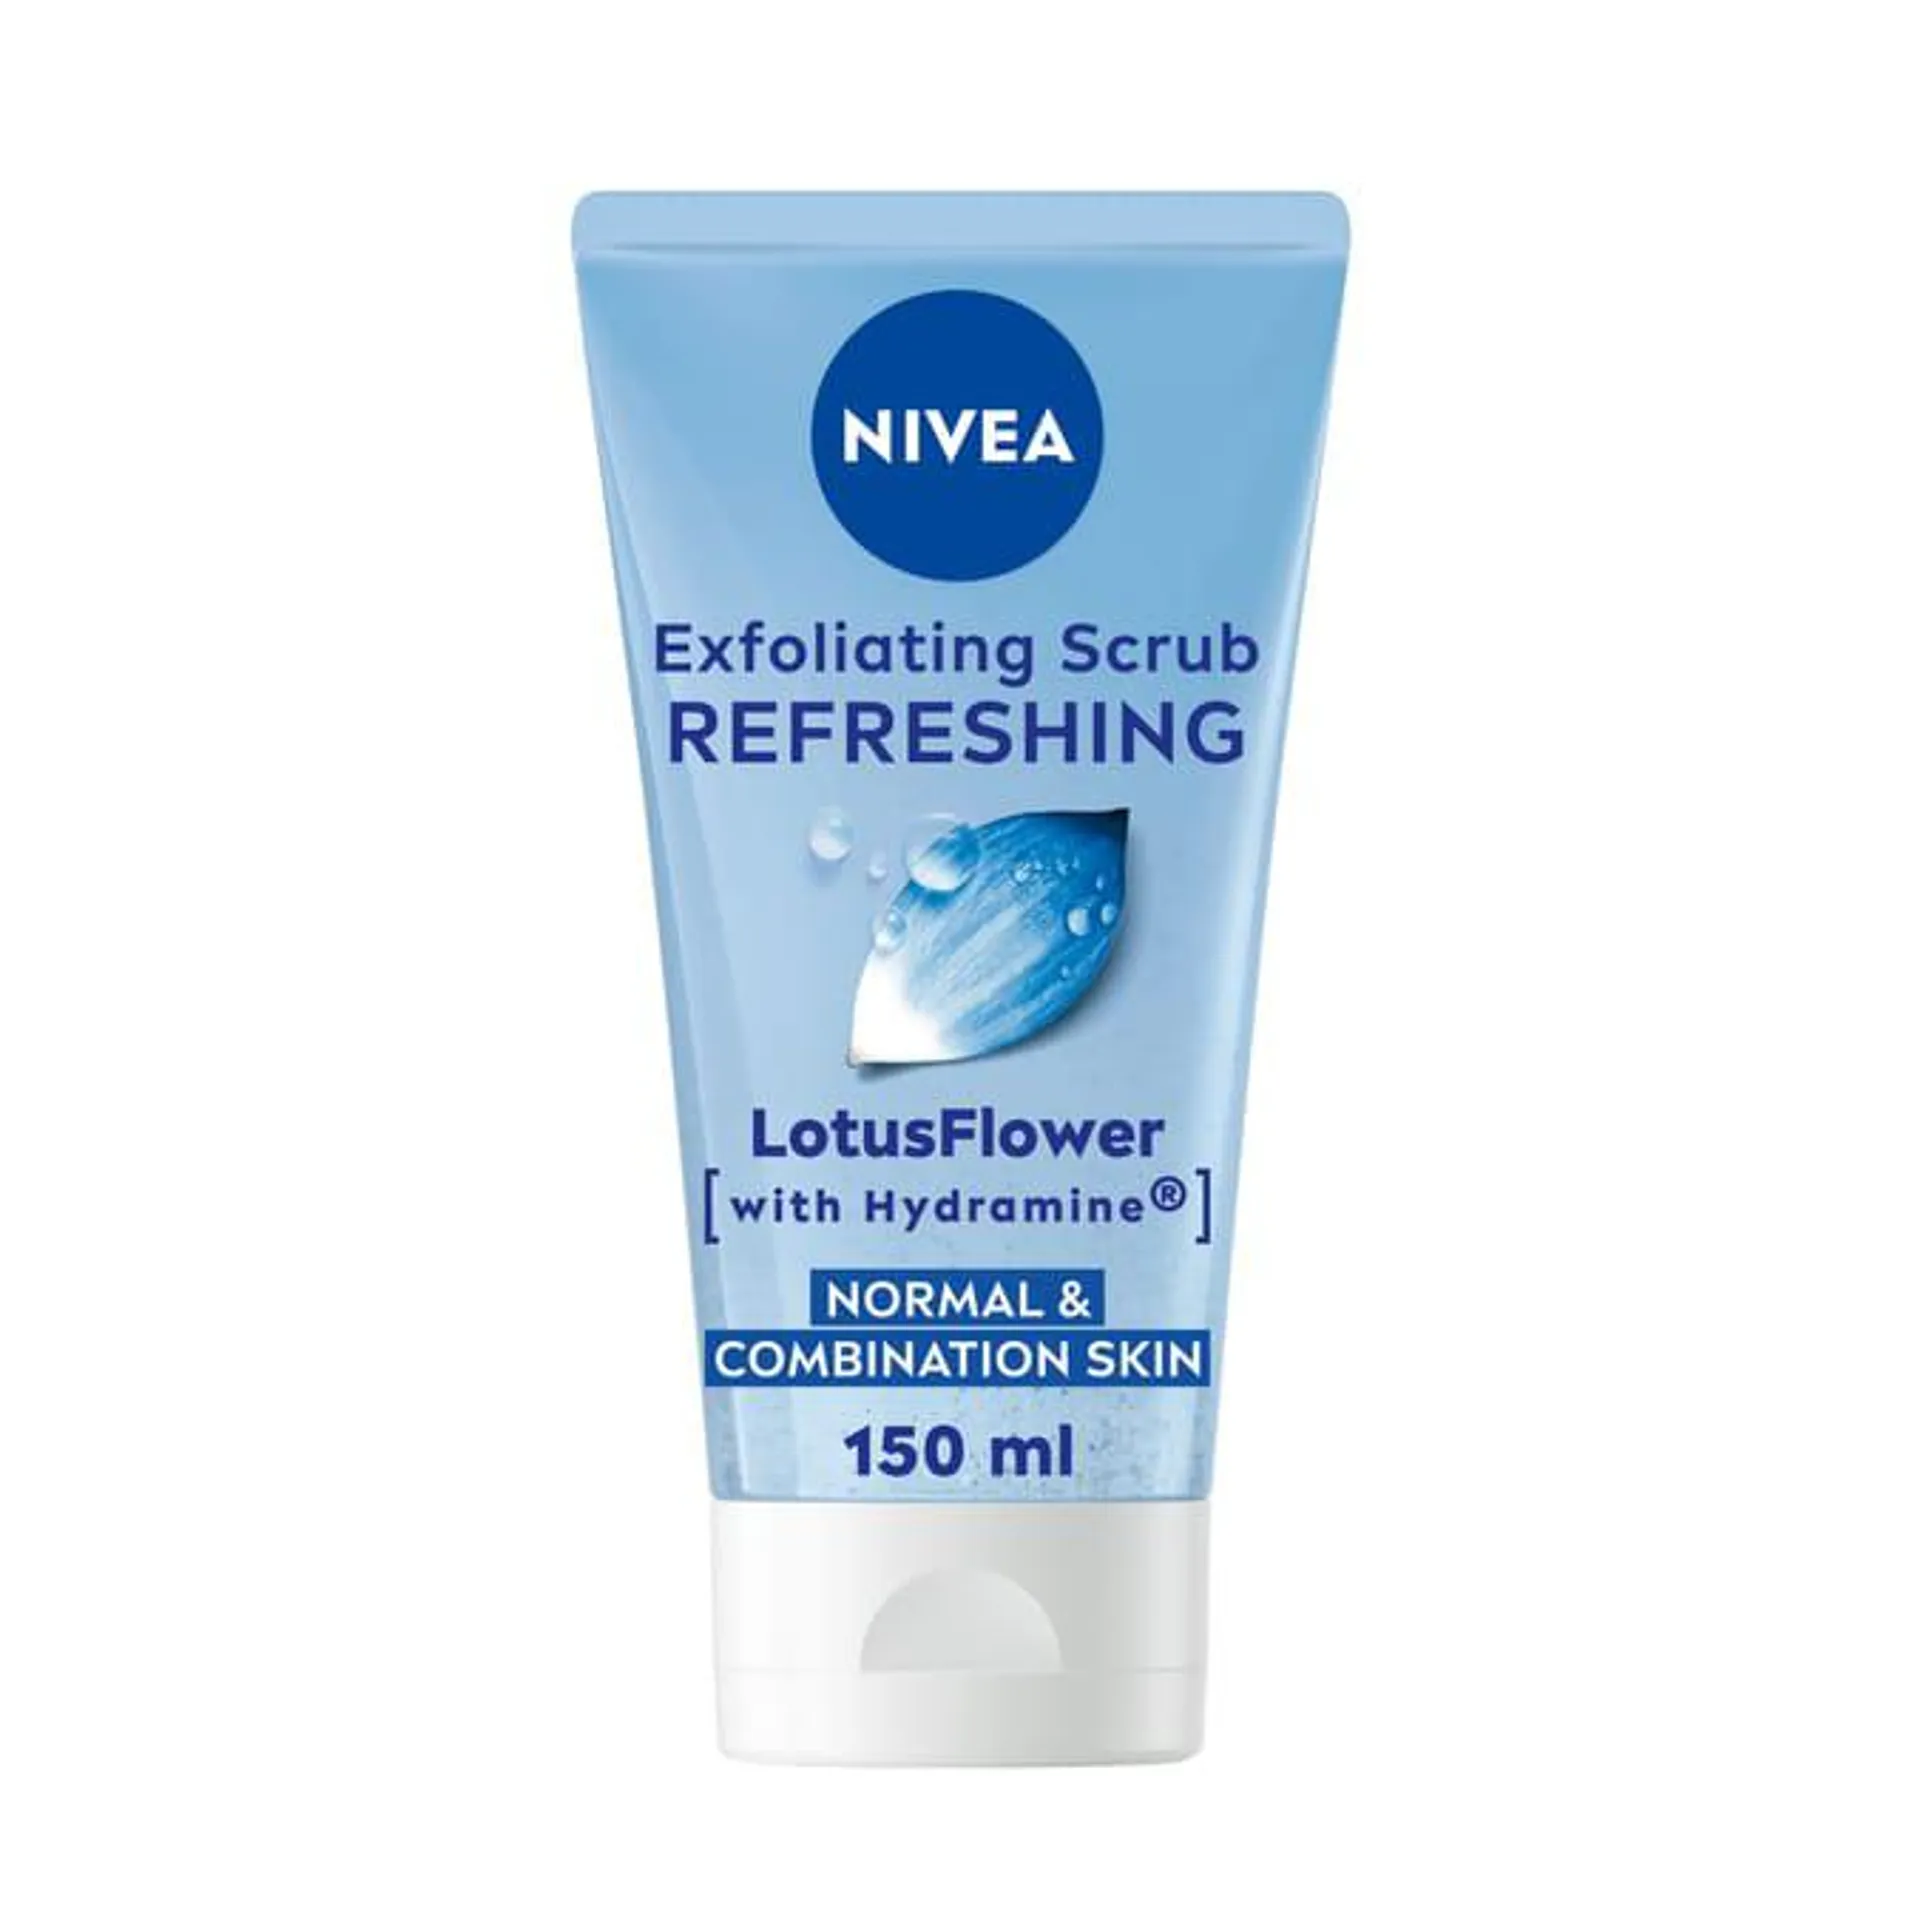 NIVEA Exfoliating Scrub Refreshing 150ml